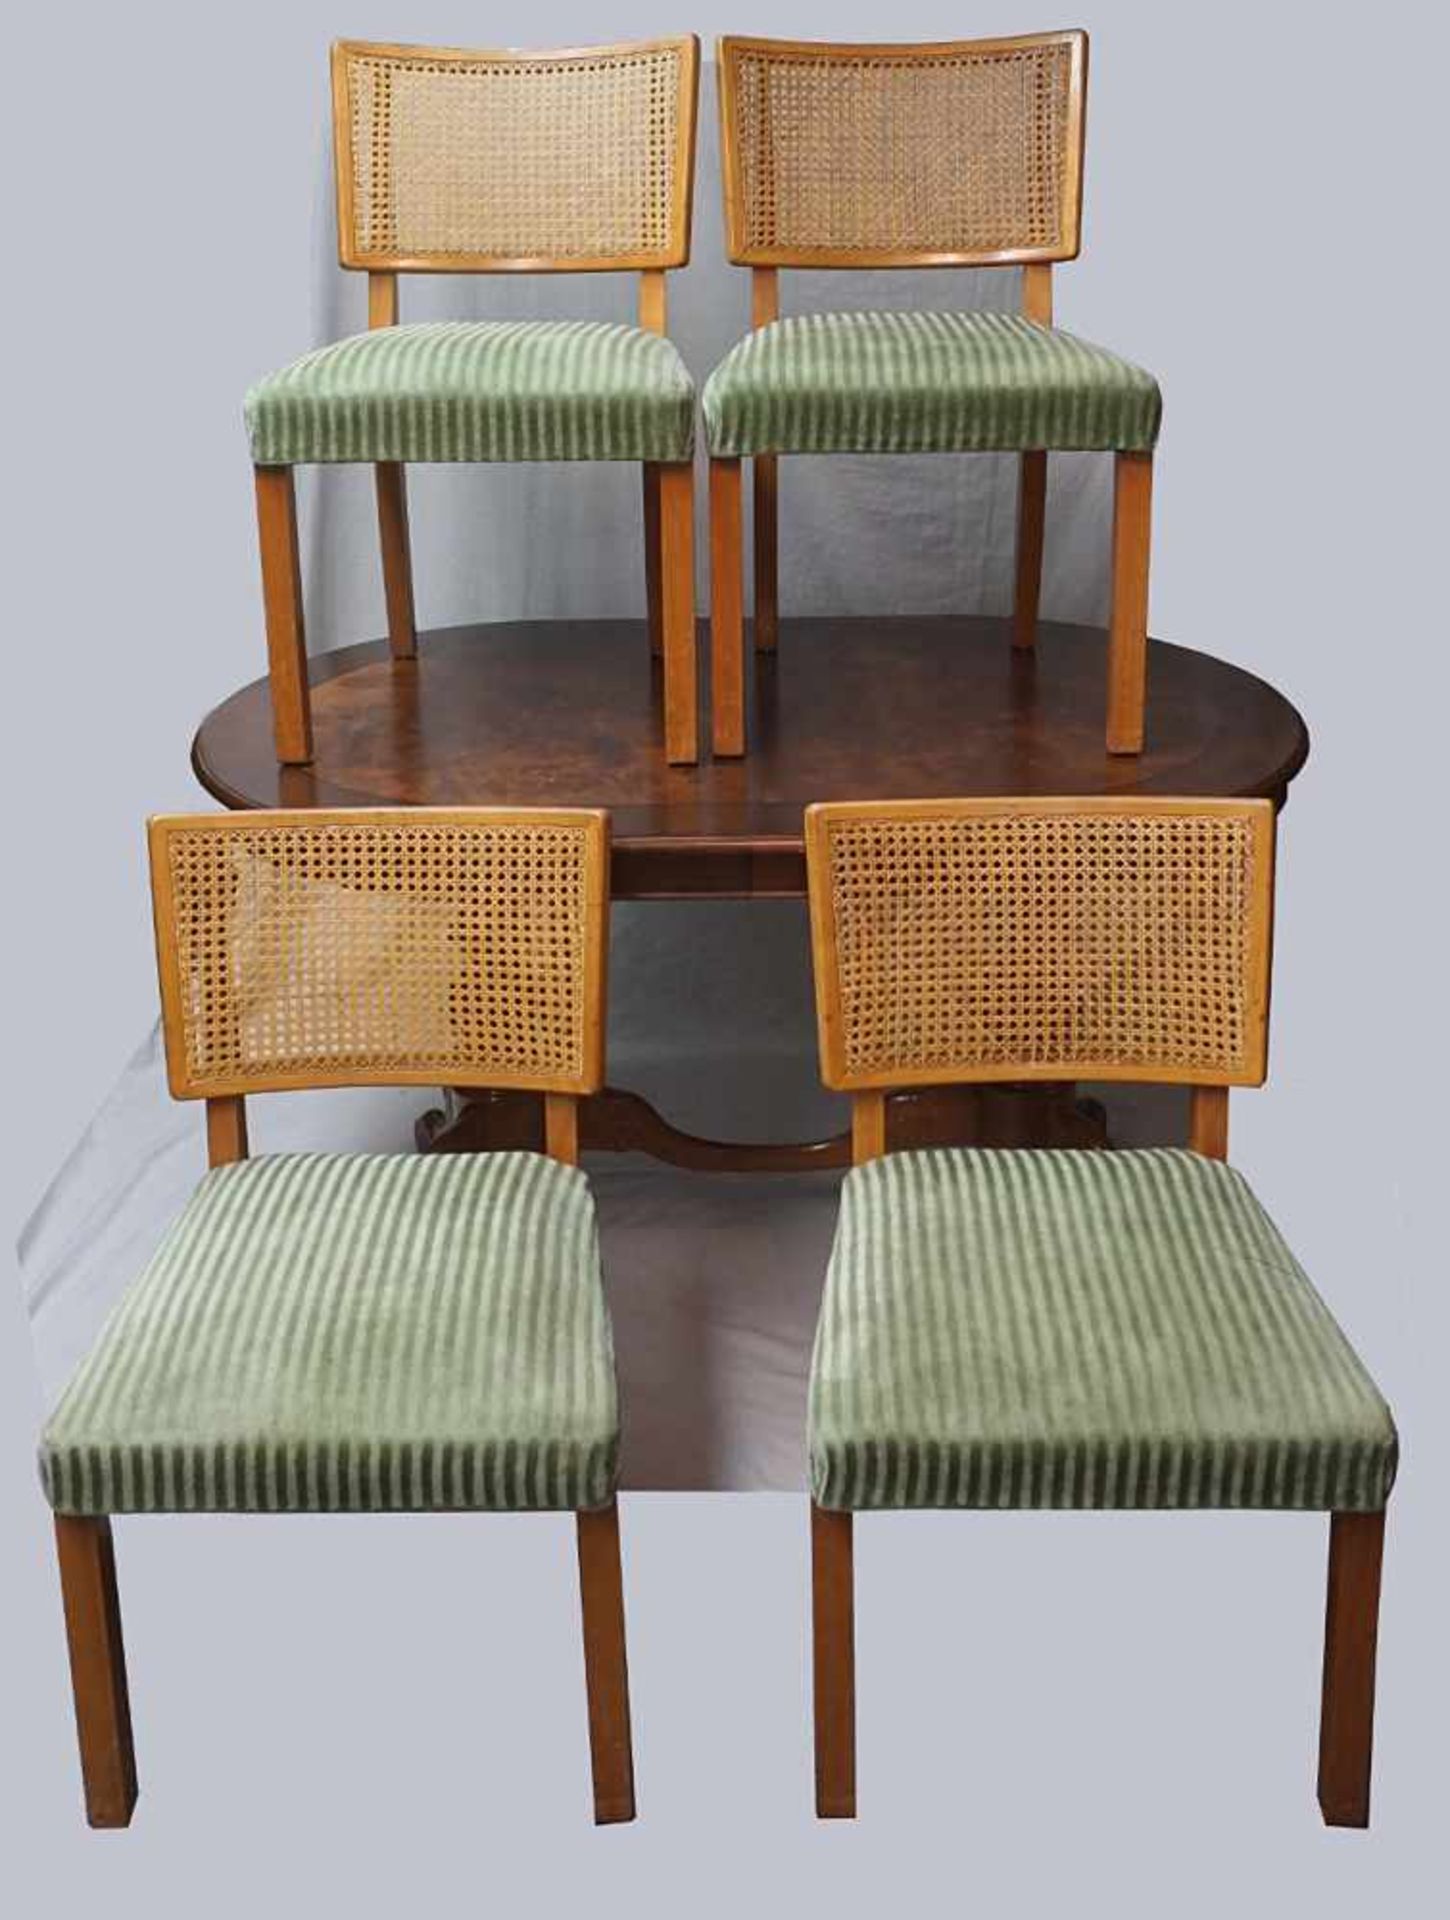 1 TischHolz ovale Tischpl. ausziehbar L ca. 130cm m. 4 Stühle Holz Geflecht/grüner Samtbezug H je